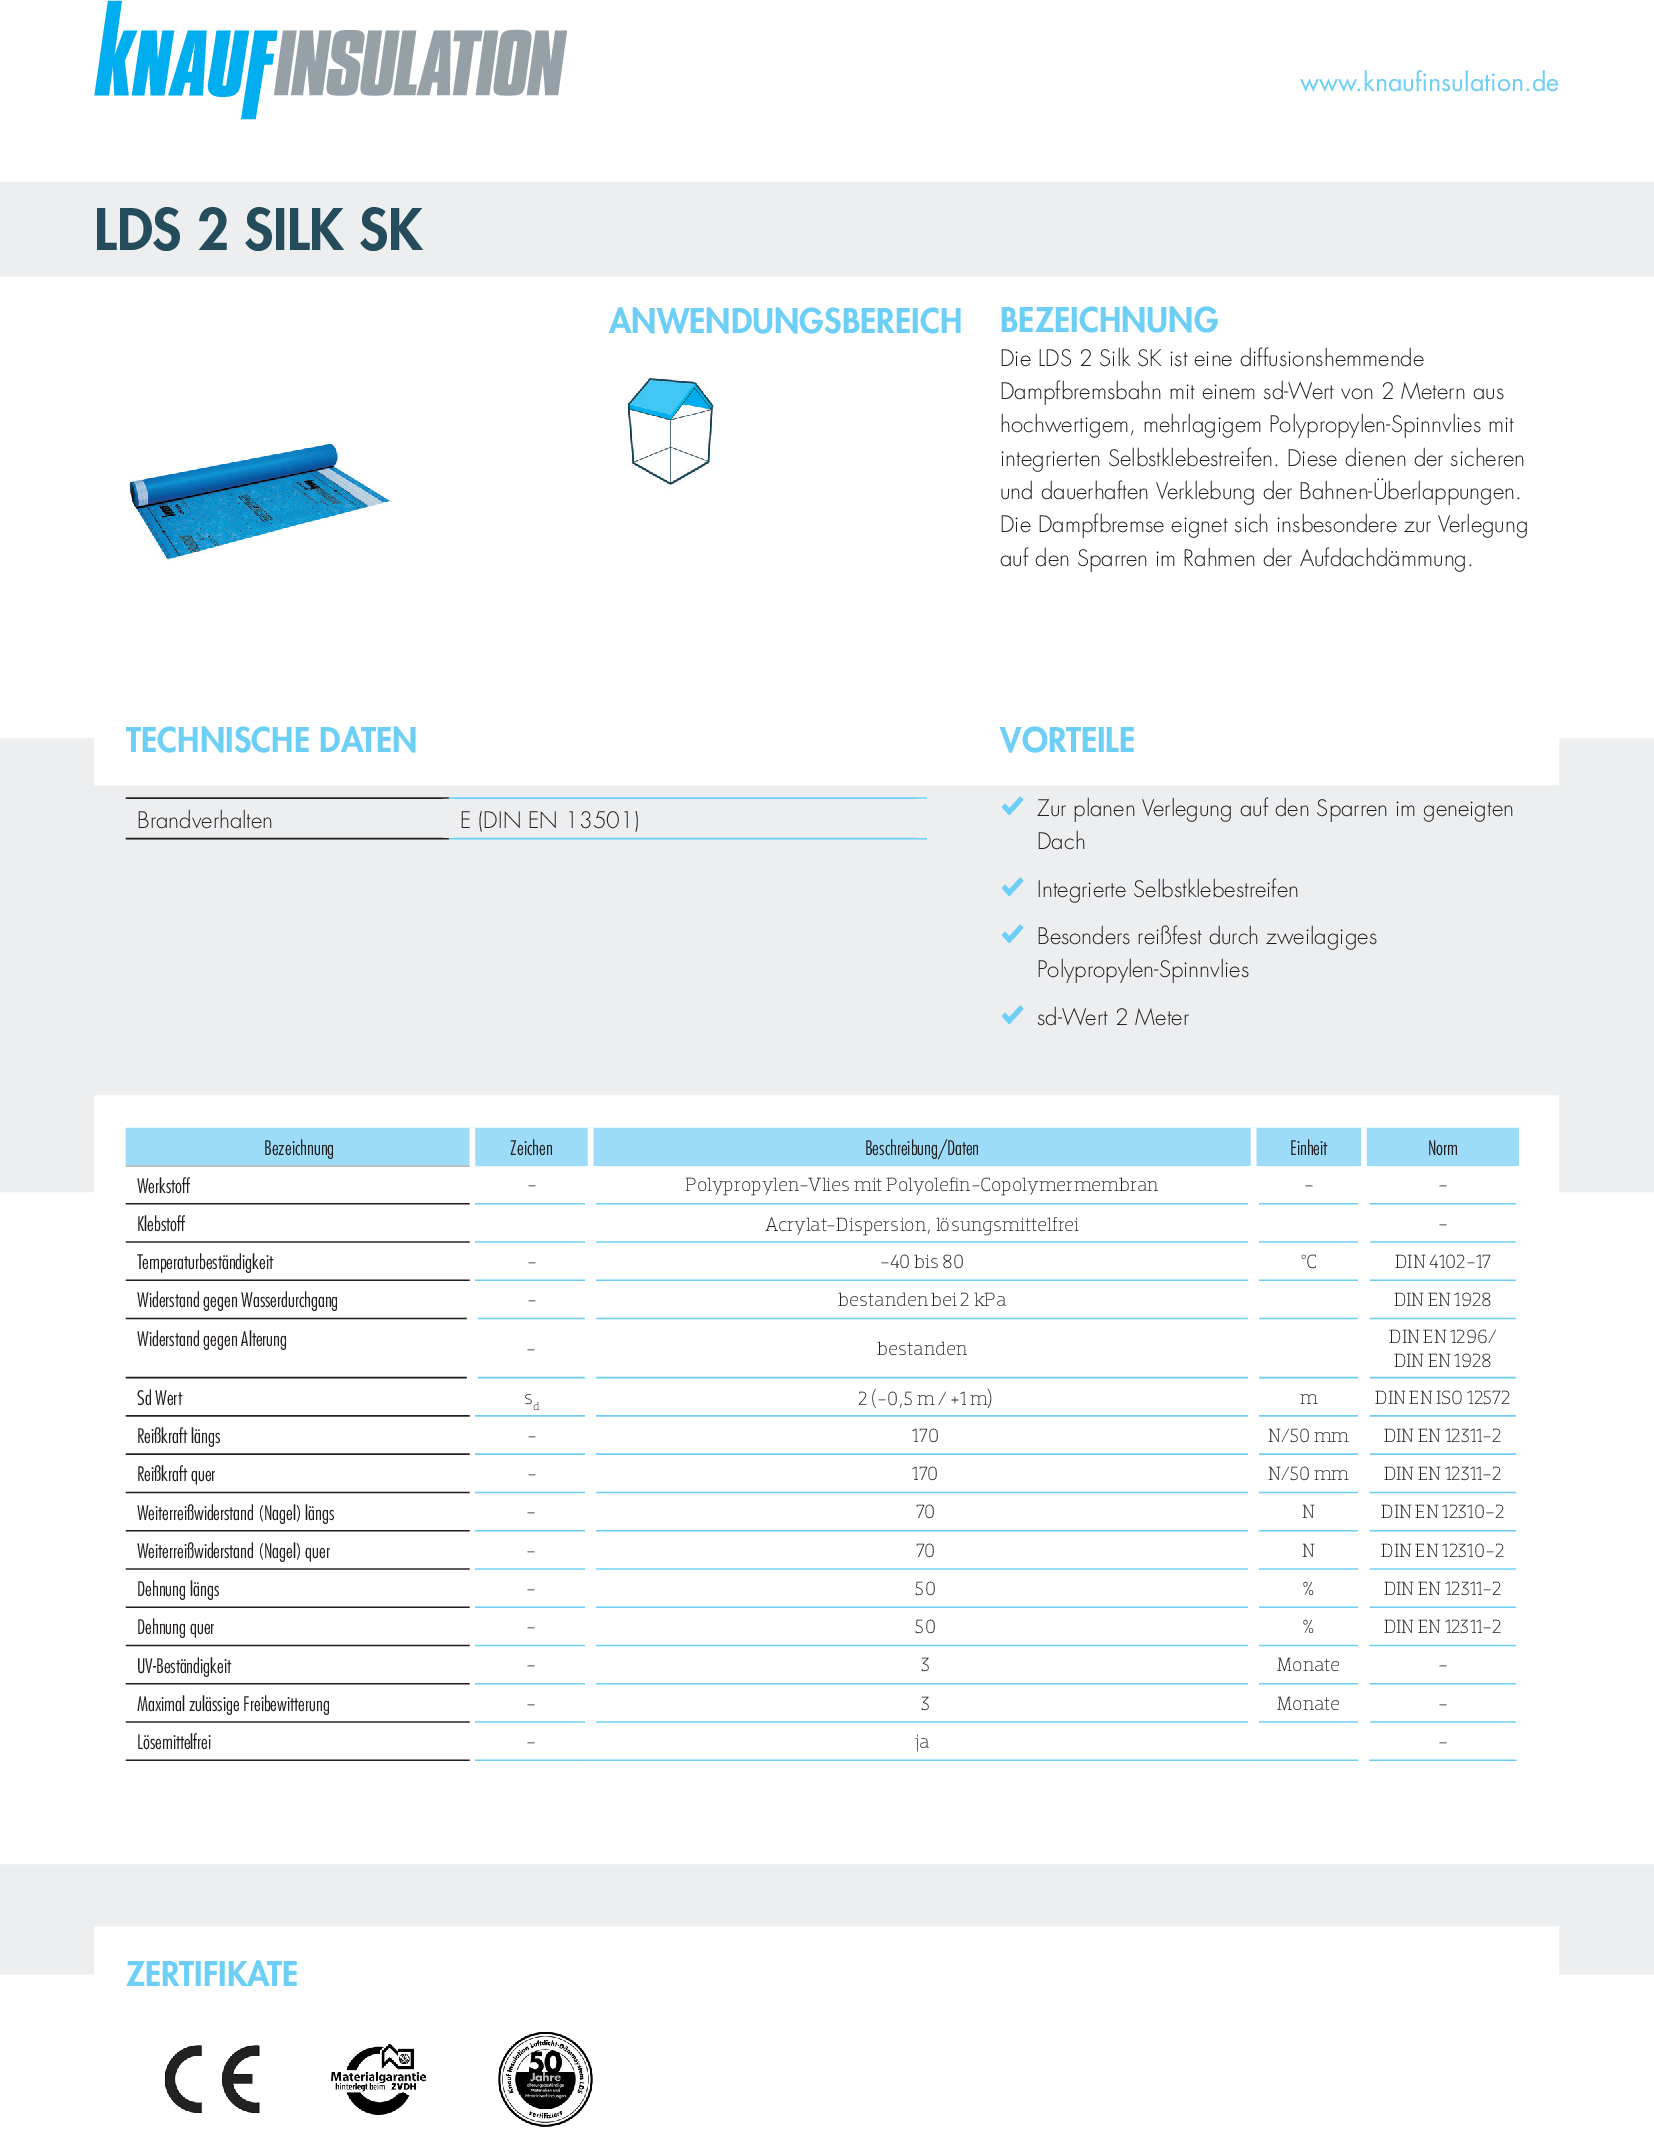 Datenblatt Knauf Insulation LDS 2 Silk SK